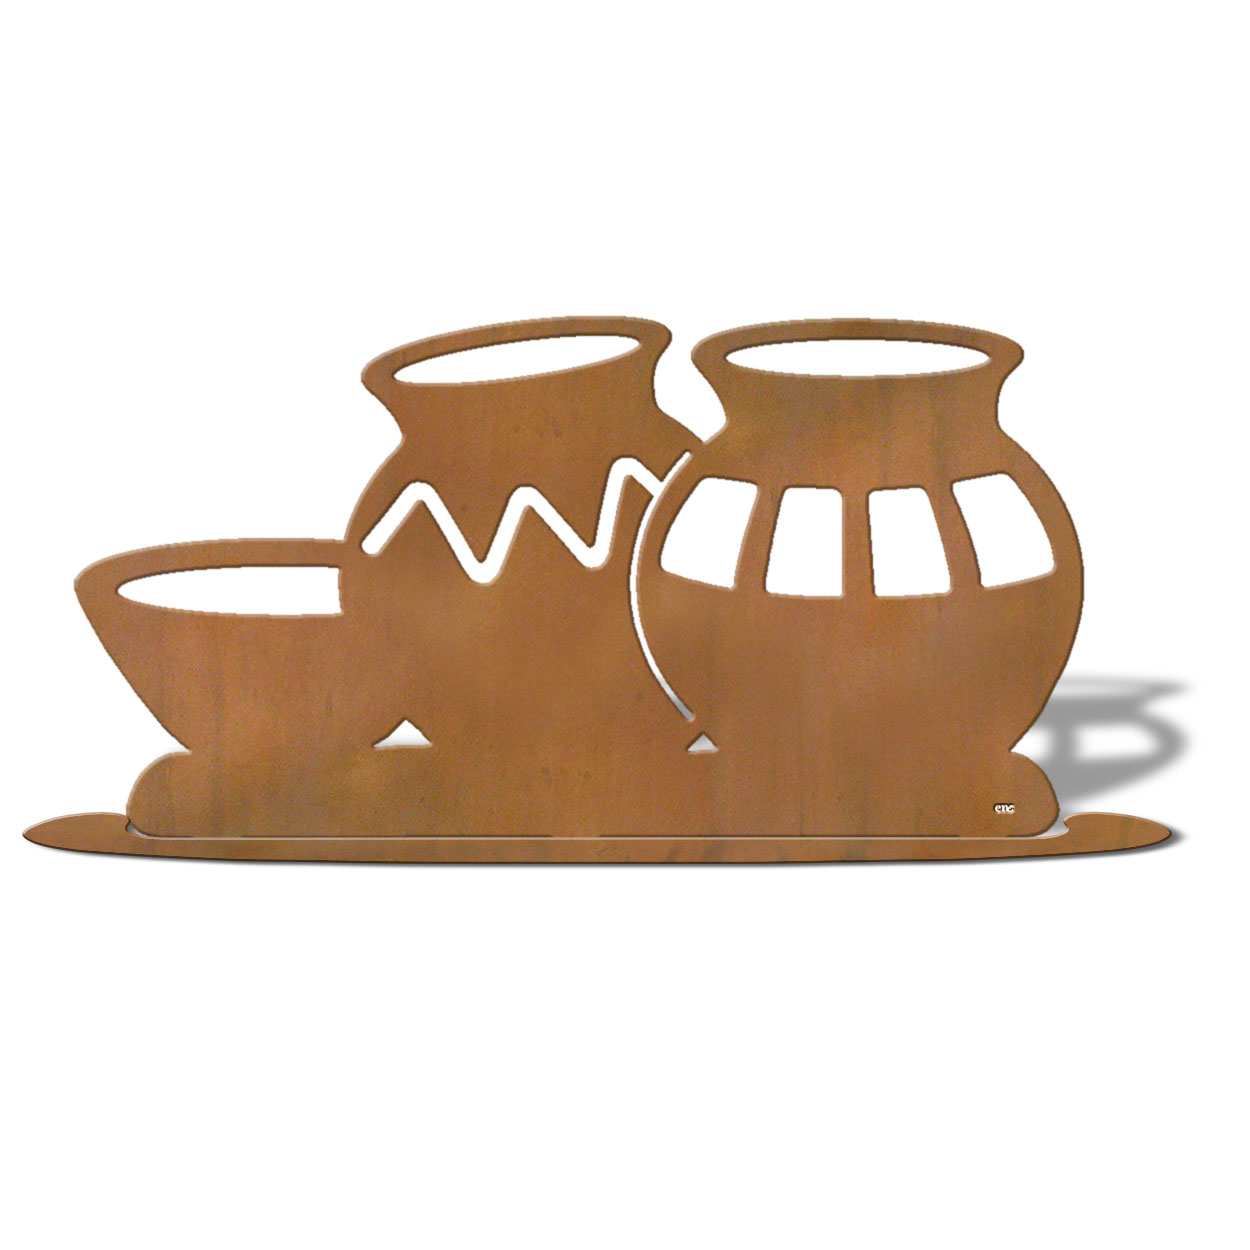 623452r - Tabletop Art - 18in x 10in - Three Pots - Rust Patina